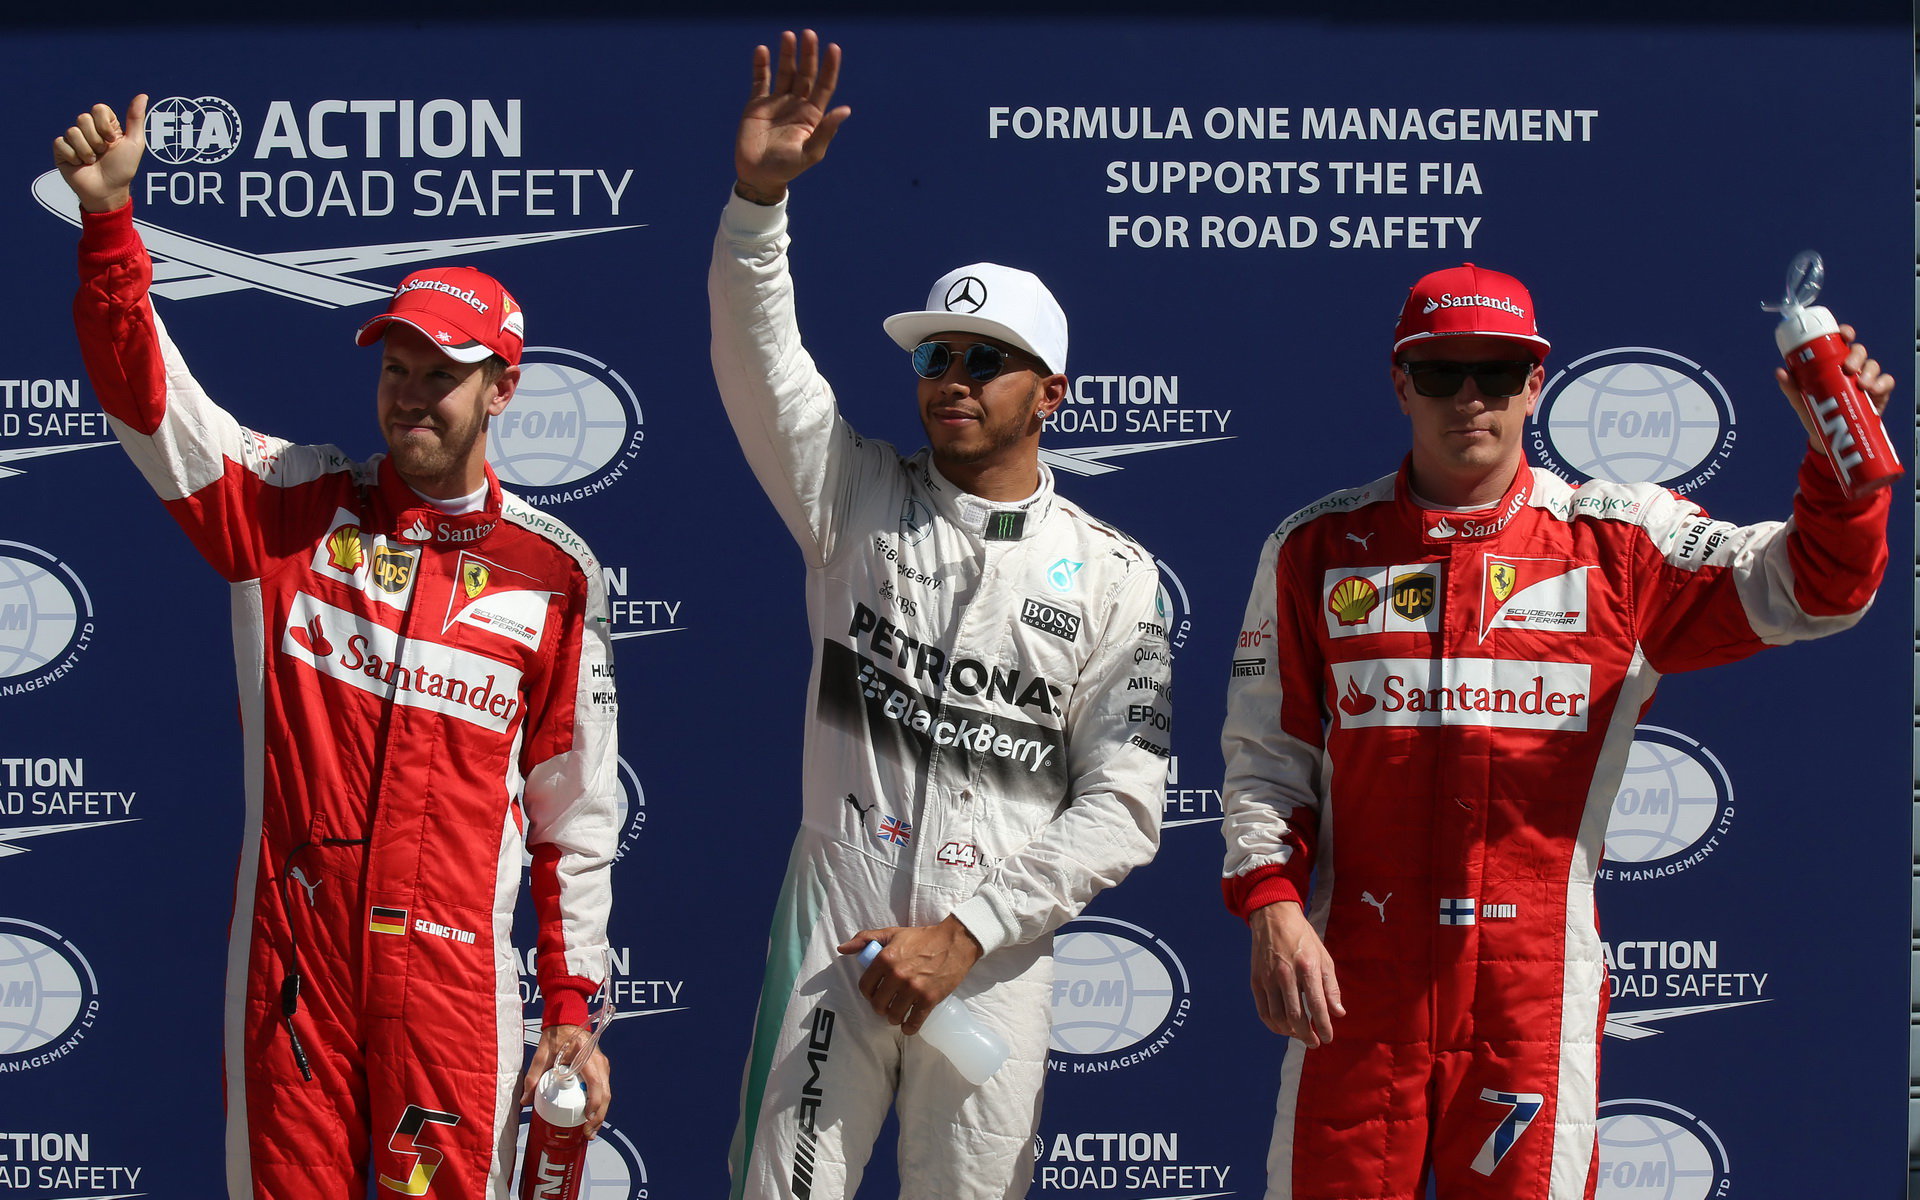 Vítěz kvalifikace Lewis Hamilton a za ním oba piloti Ferrari, GP Itálie (Monza)